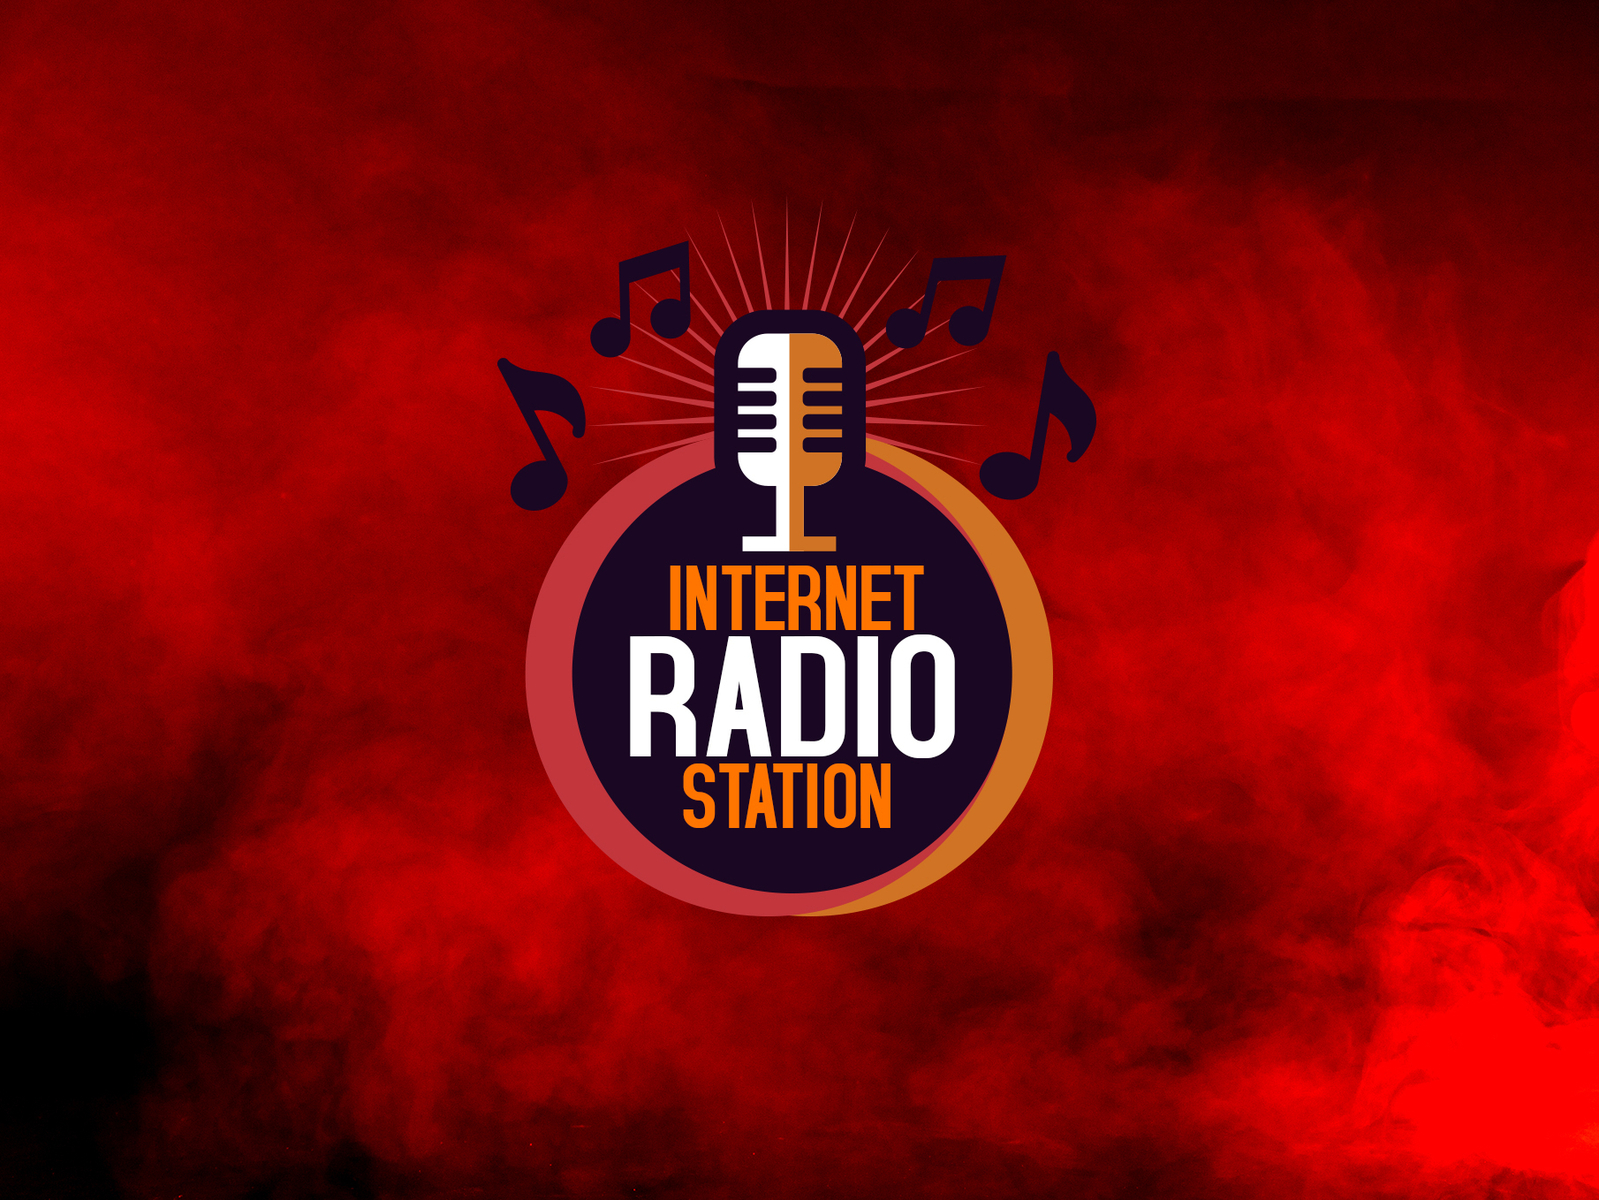 Internet Radio Station Logo by Ahmed Musab on Dribbble